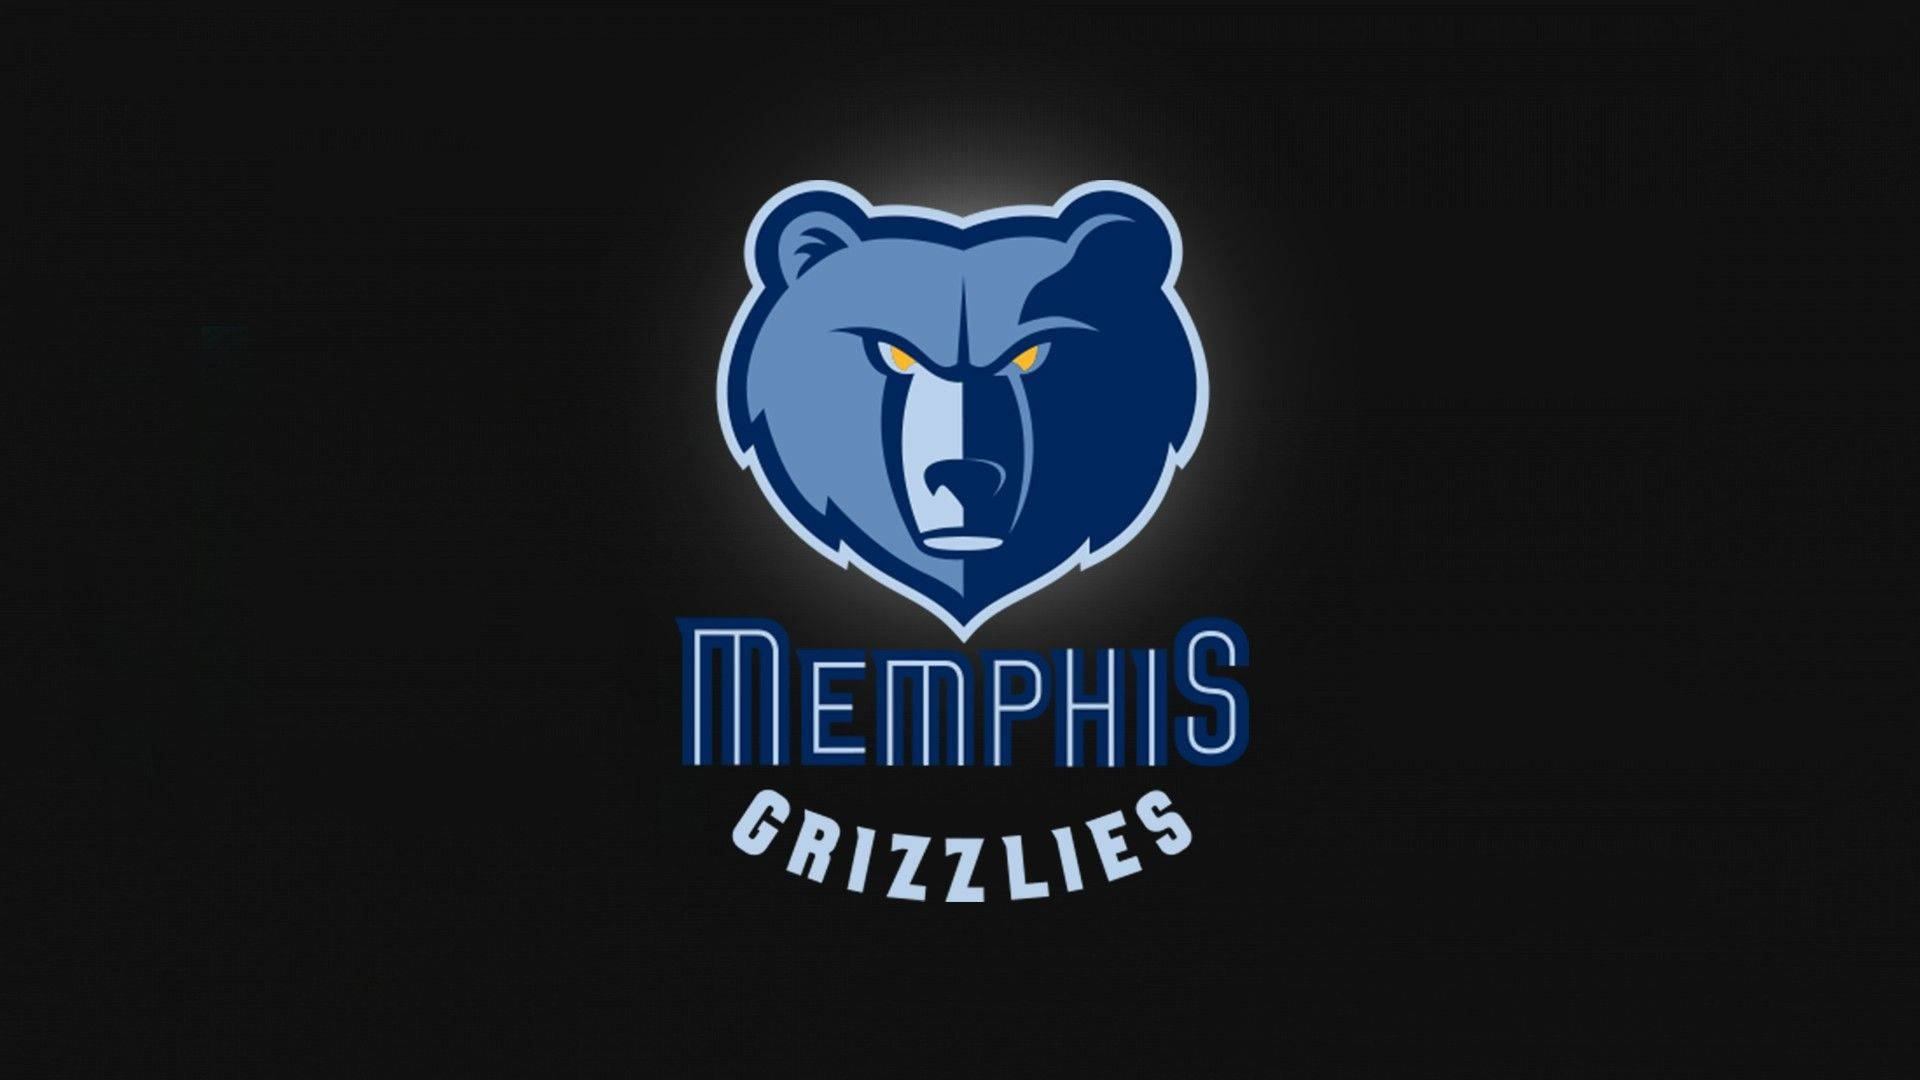 Free Memphis Grizzlies Logo Wallpaper Downloads, Memphis Grizzlies Logo Wallpaper for FREE